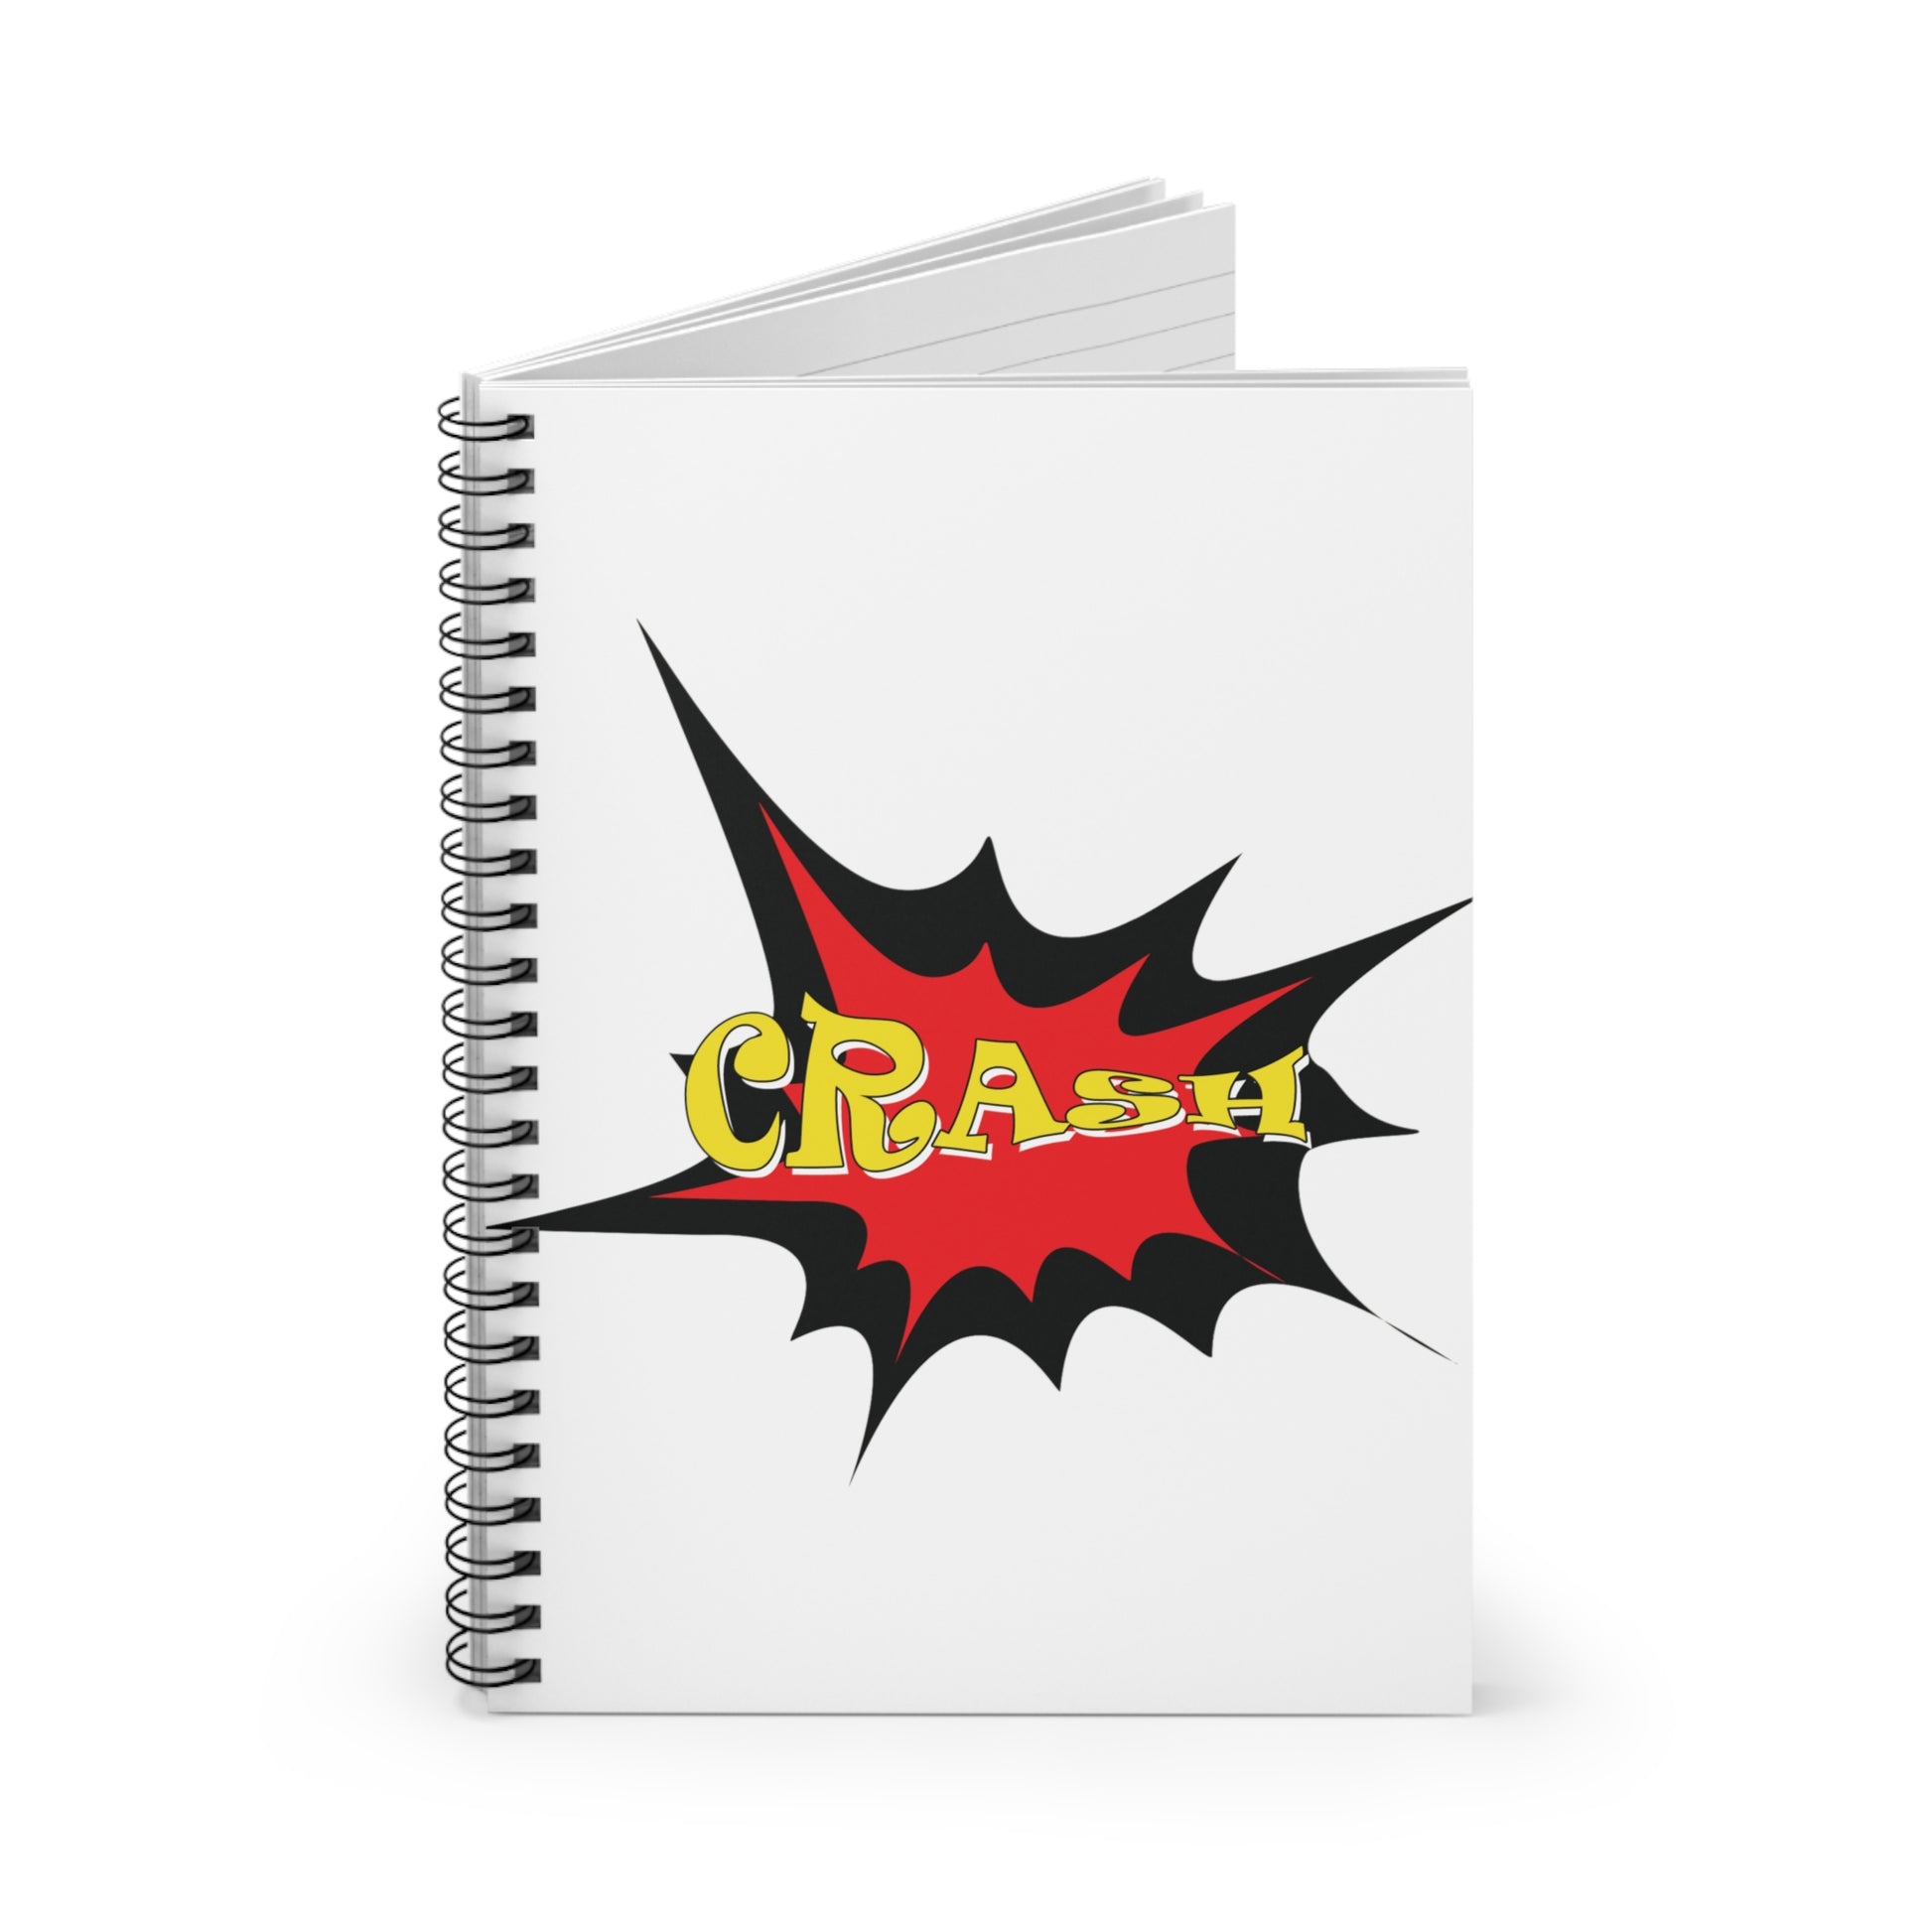 Superhero CRASH: Spiral Notebook - Log Books - Journals - Diaries - and More Custom Printed by TheGlassyLass